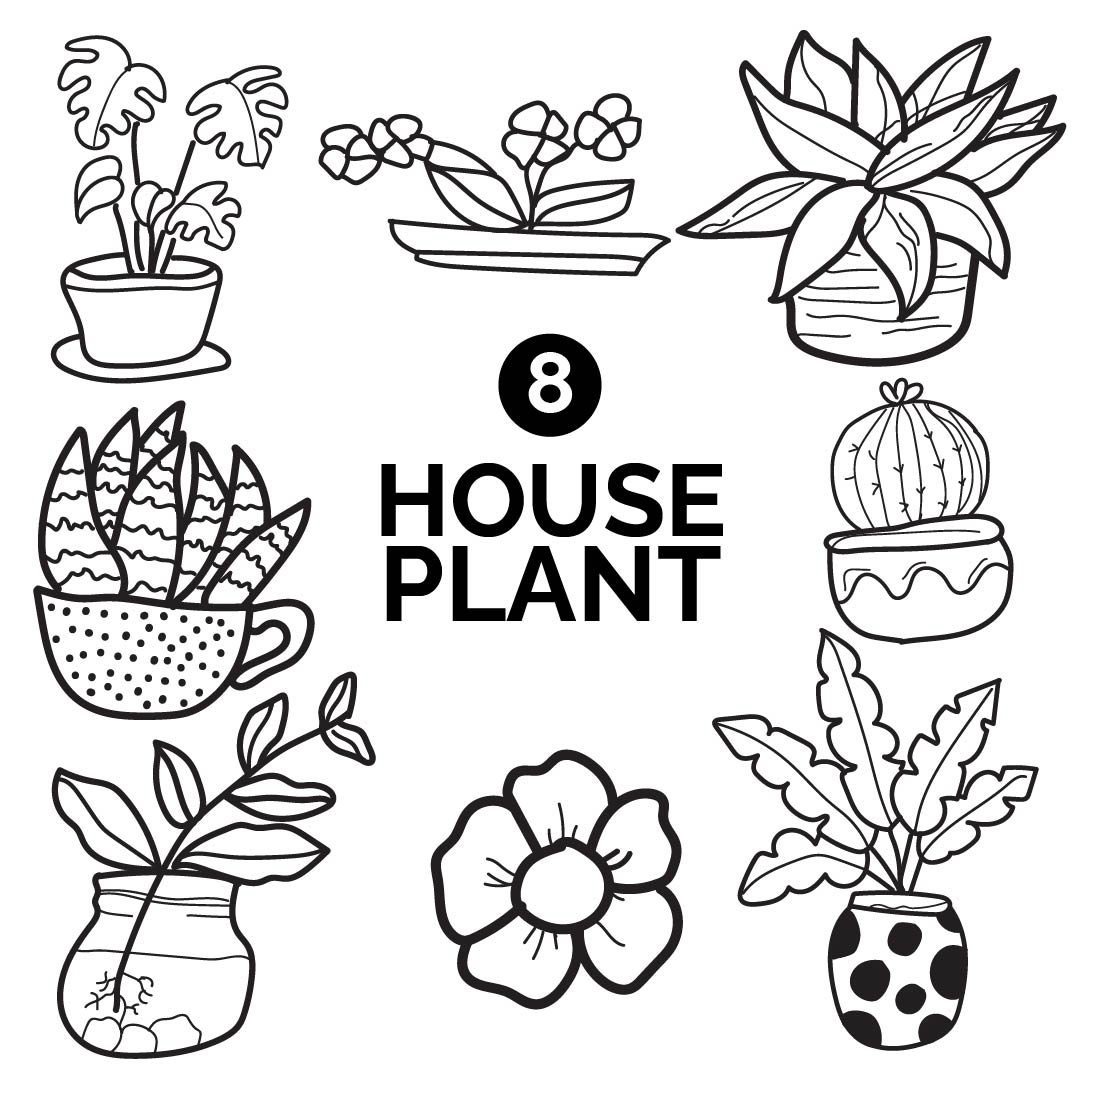 8 house plants doodle illustration cover image.